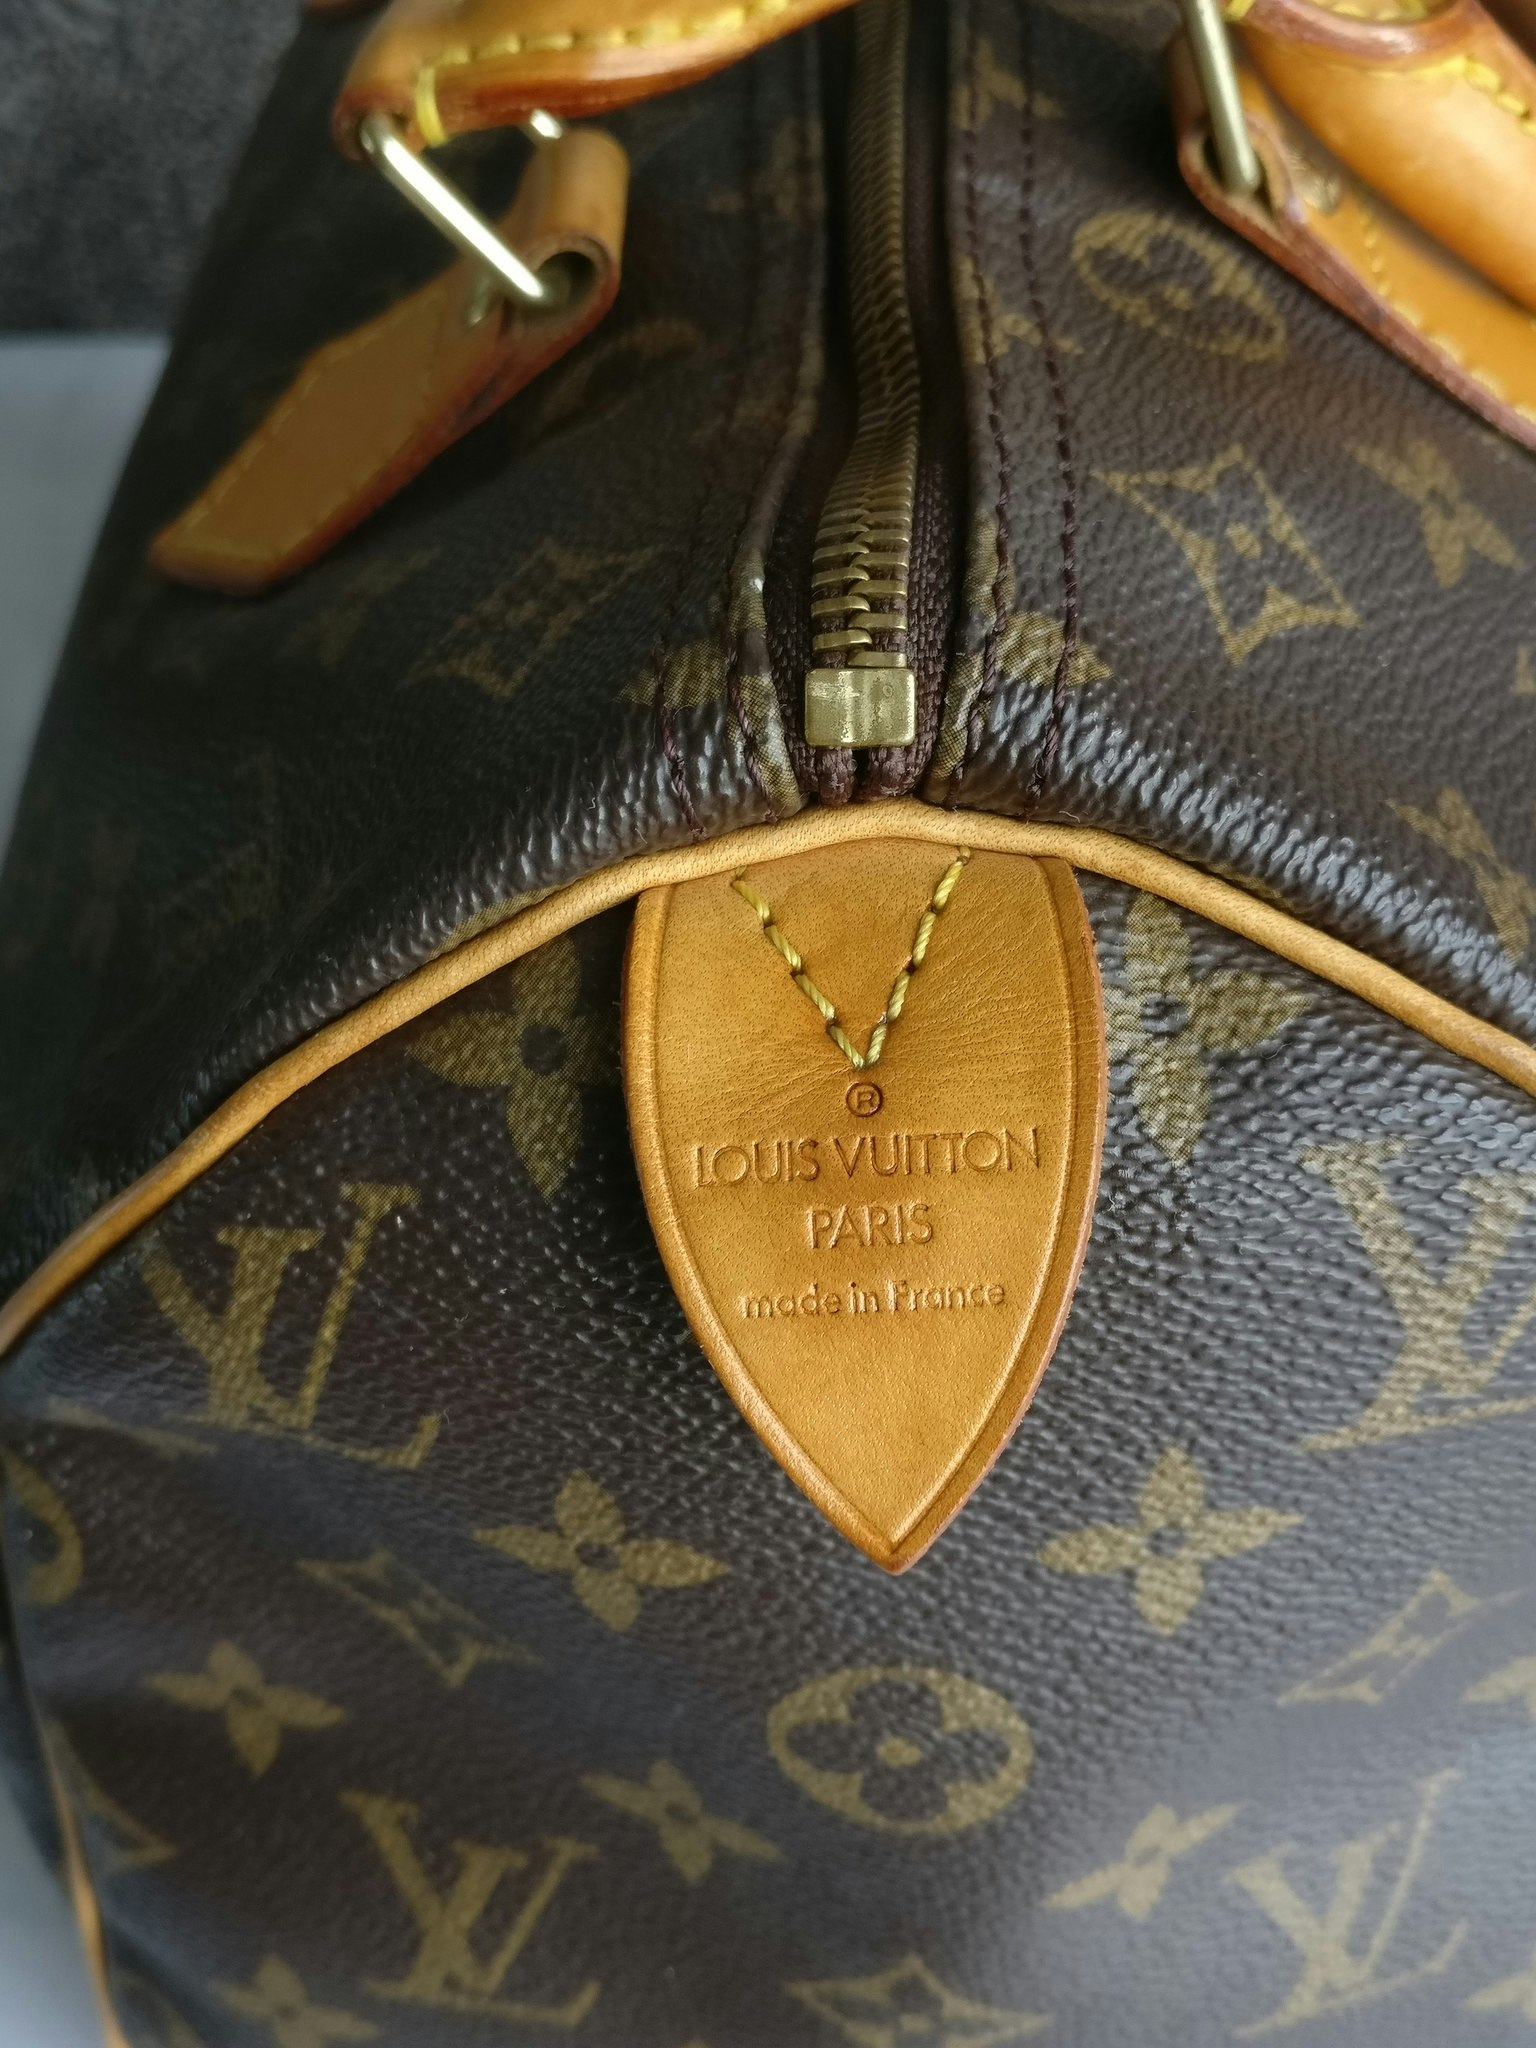 Louis Vuitton Speedy 30 - Good or Bag